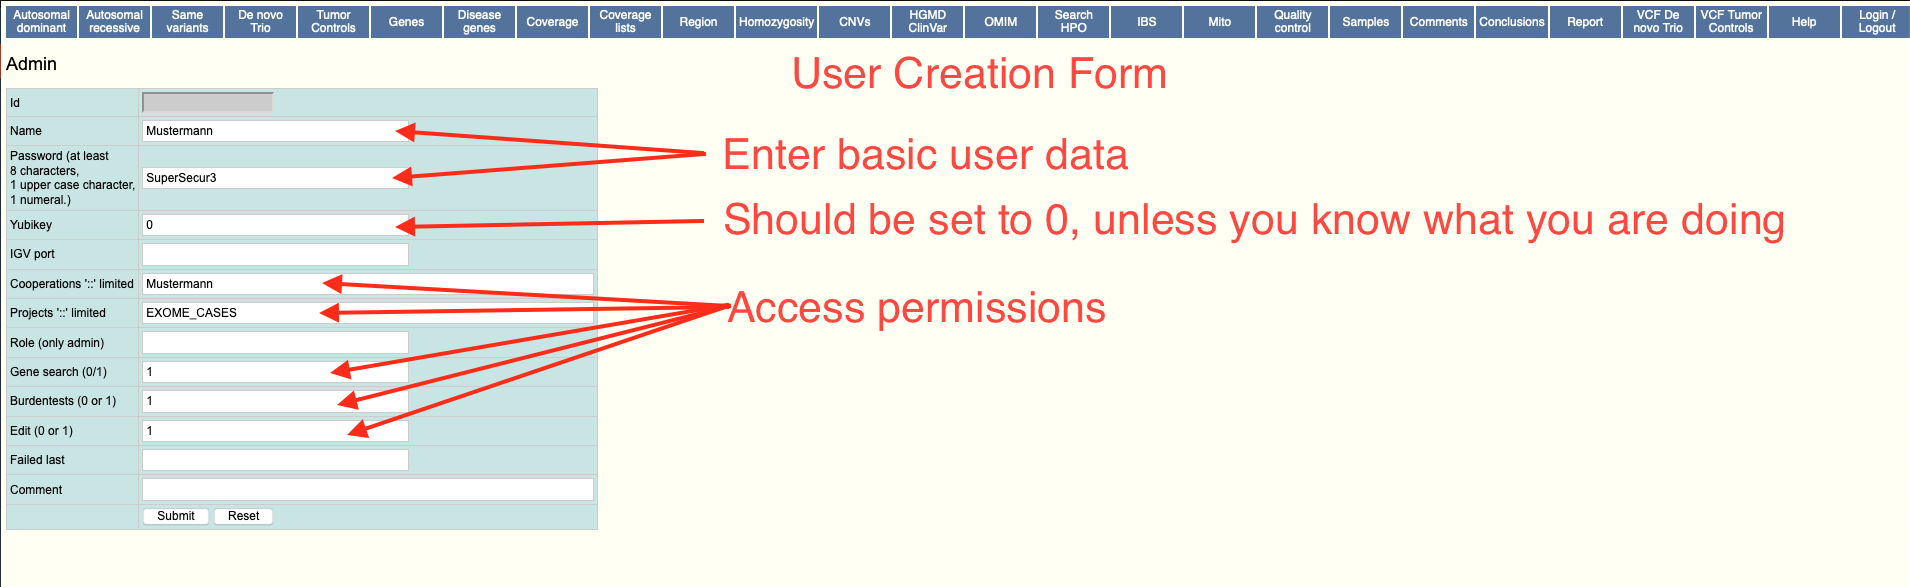 User Creation Form